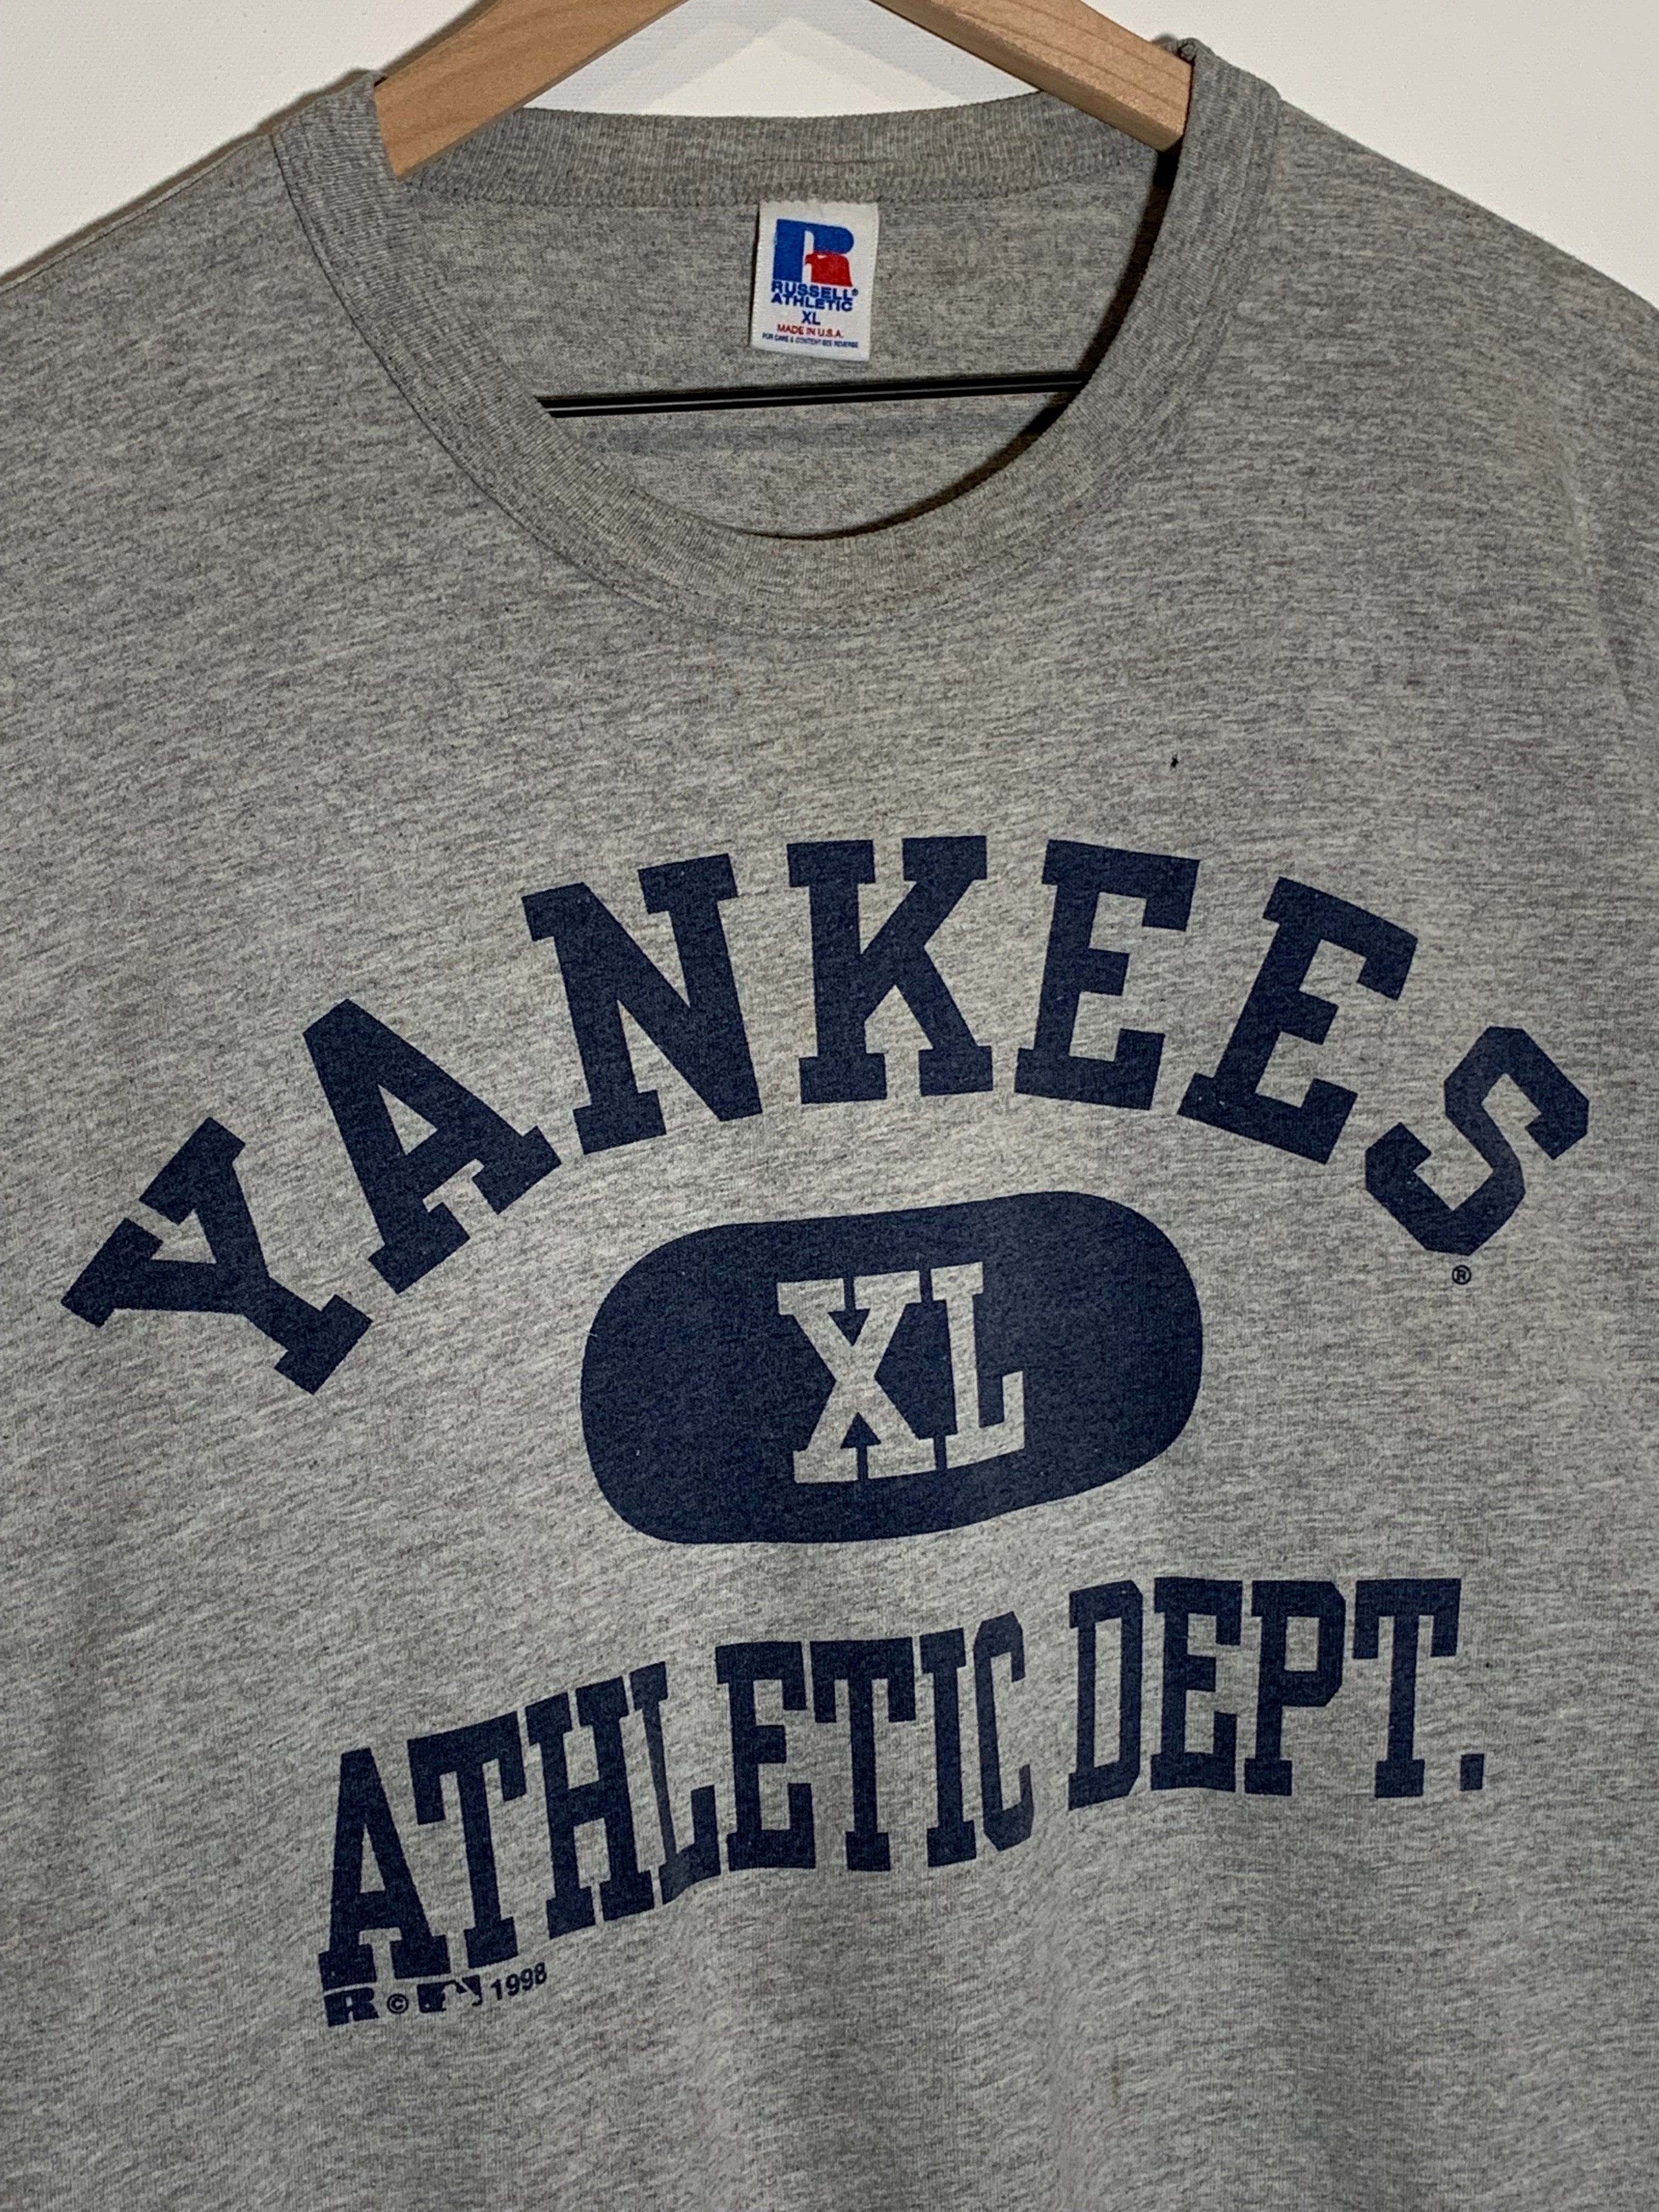 Vintage Yankees 1998 Crop Top Shirt XL